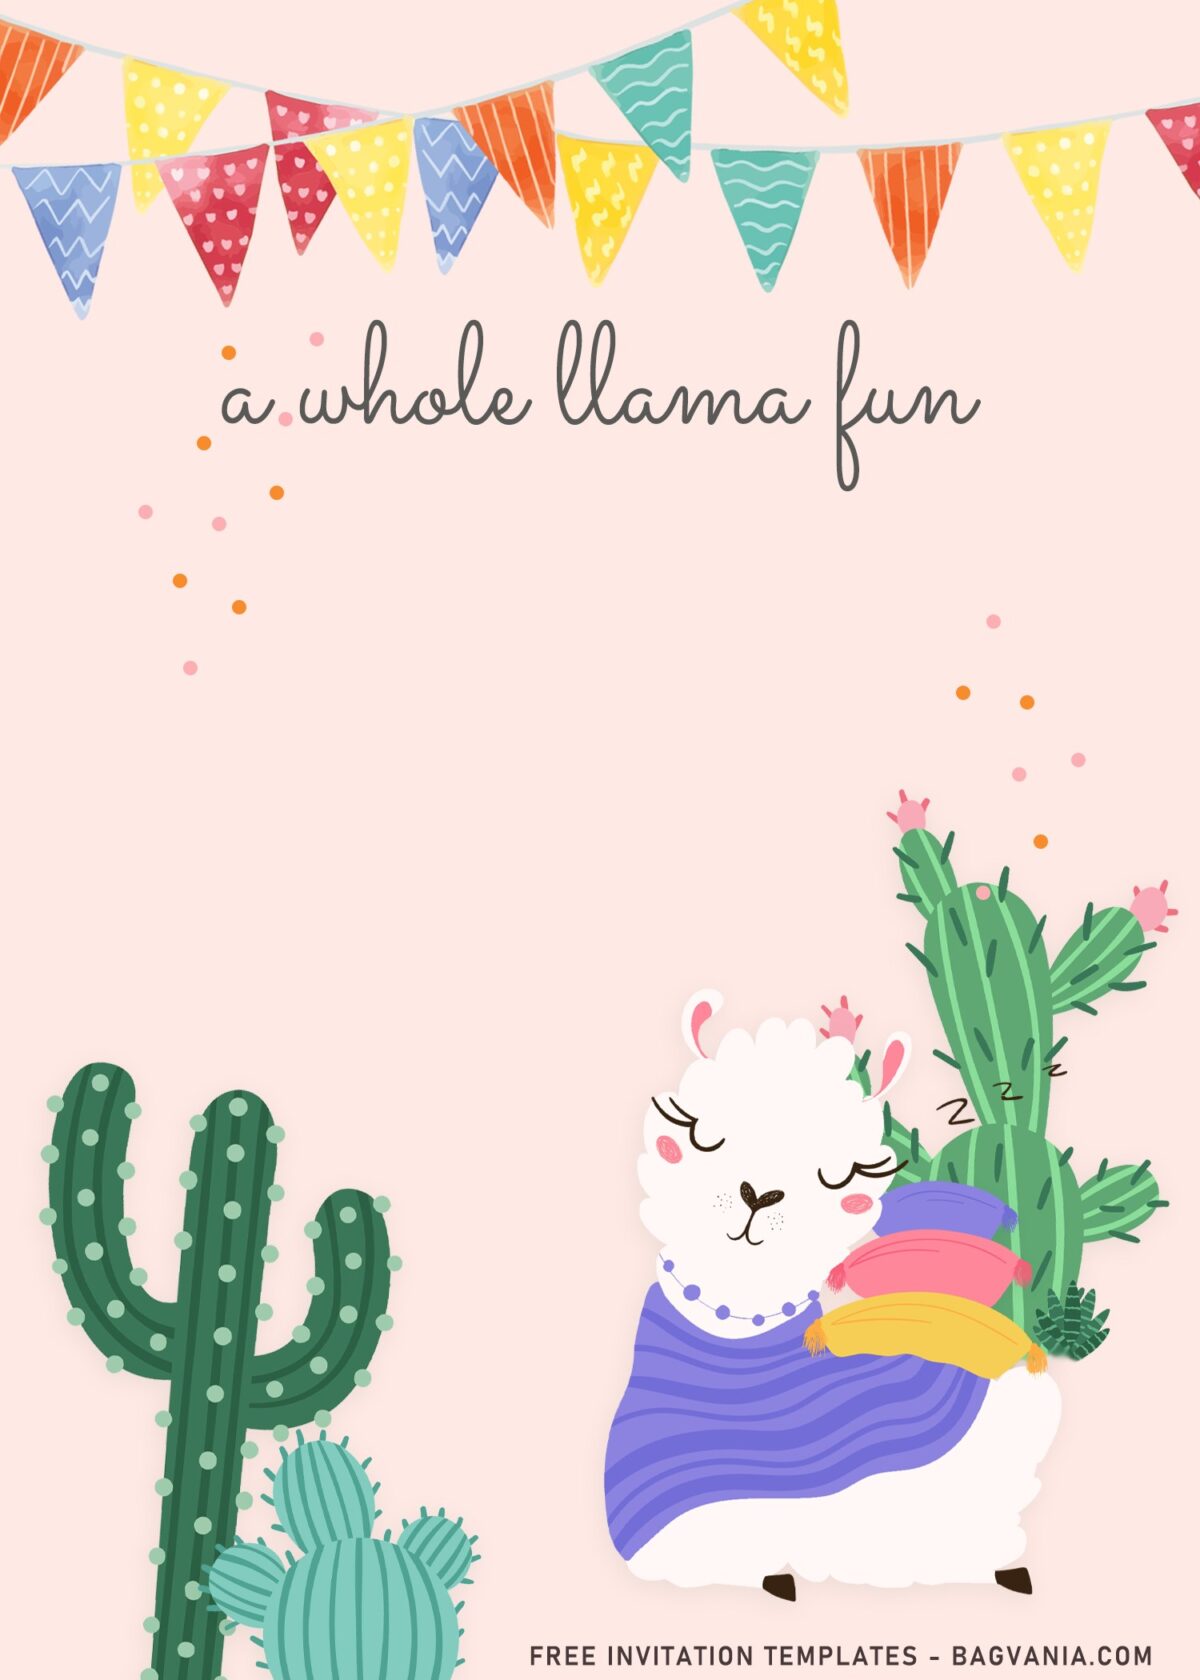 8+ Whole Llama Fun Birthday Invitation Templates For Birthday Girls with Fiesta Llama and rainbow blanket rug